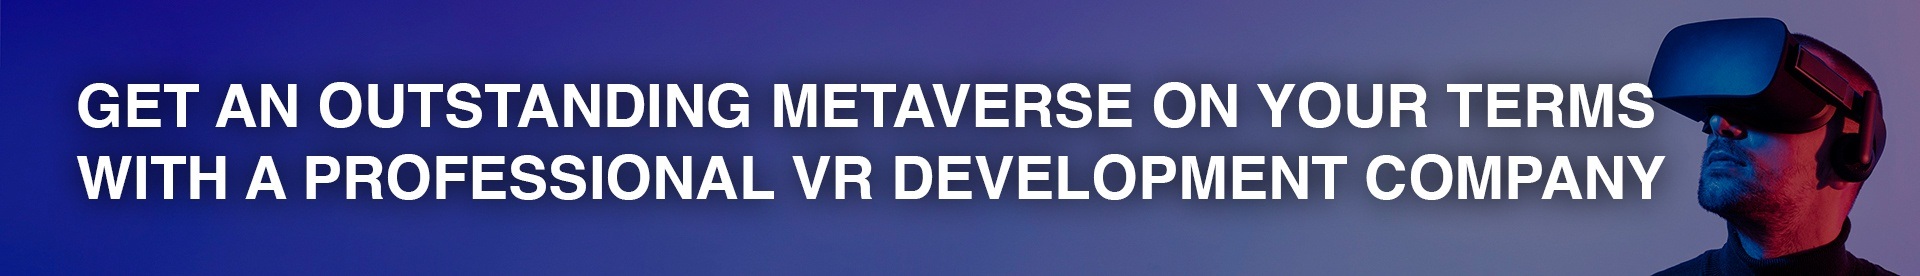 VR development company